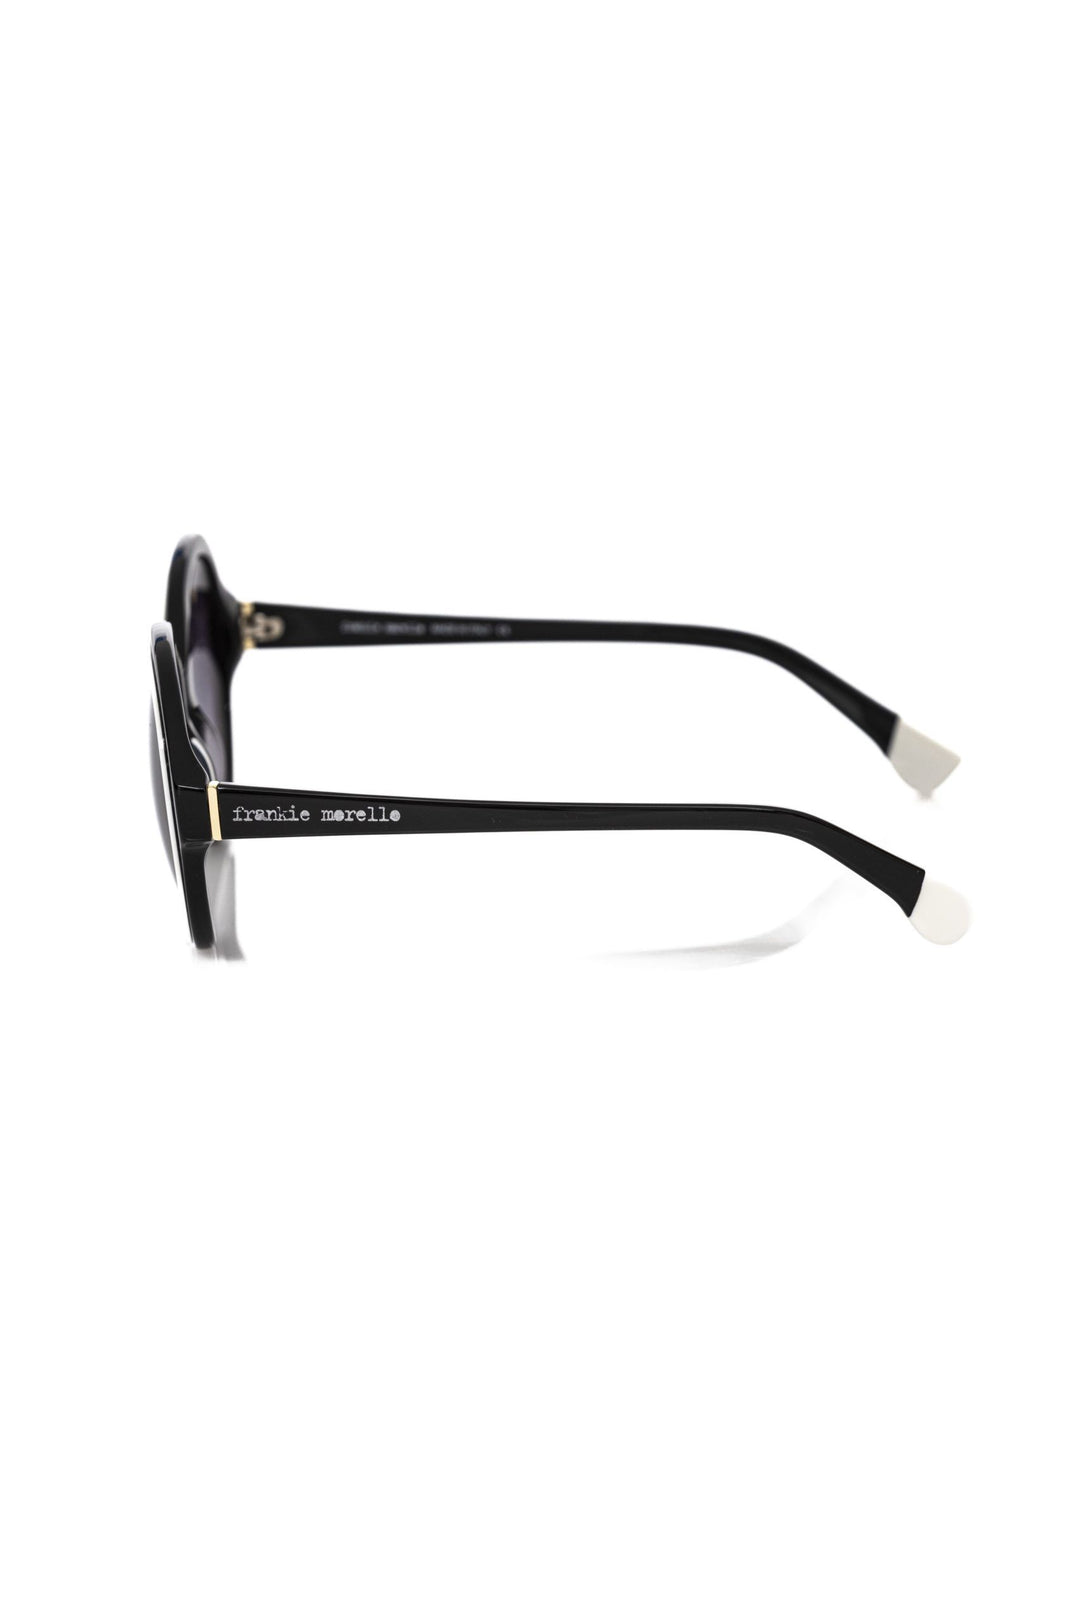 Frankie Morello Elegant Black Round Sunglasses with White Accent